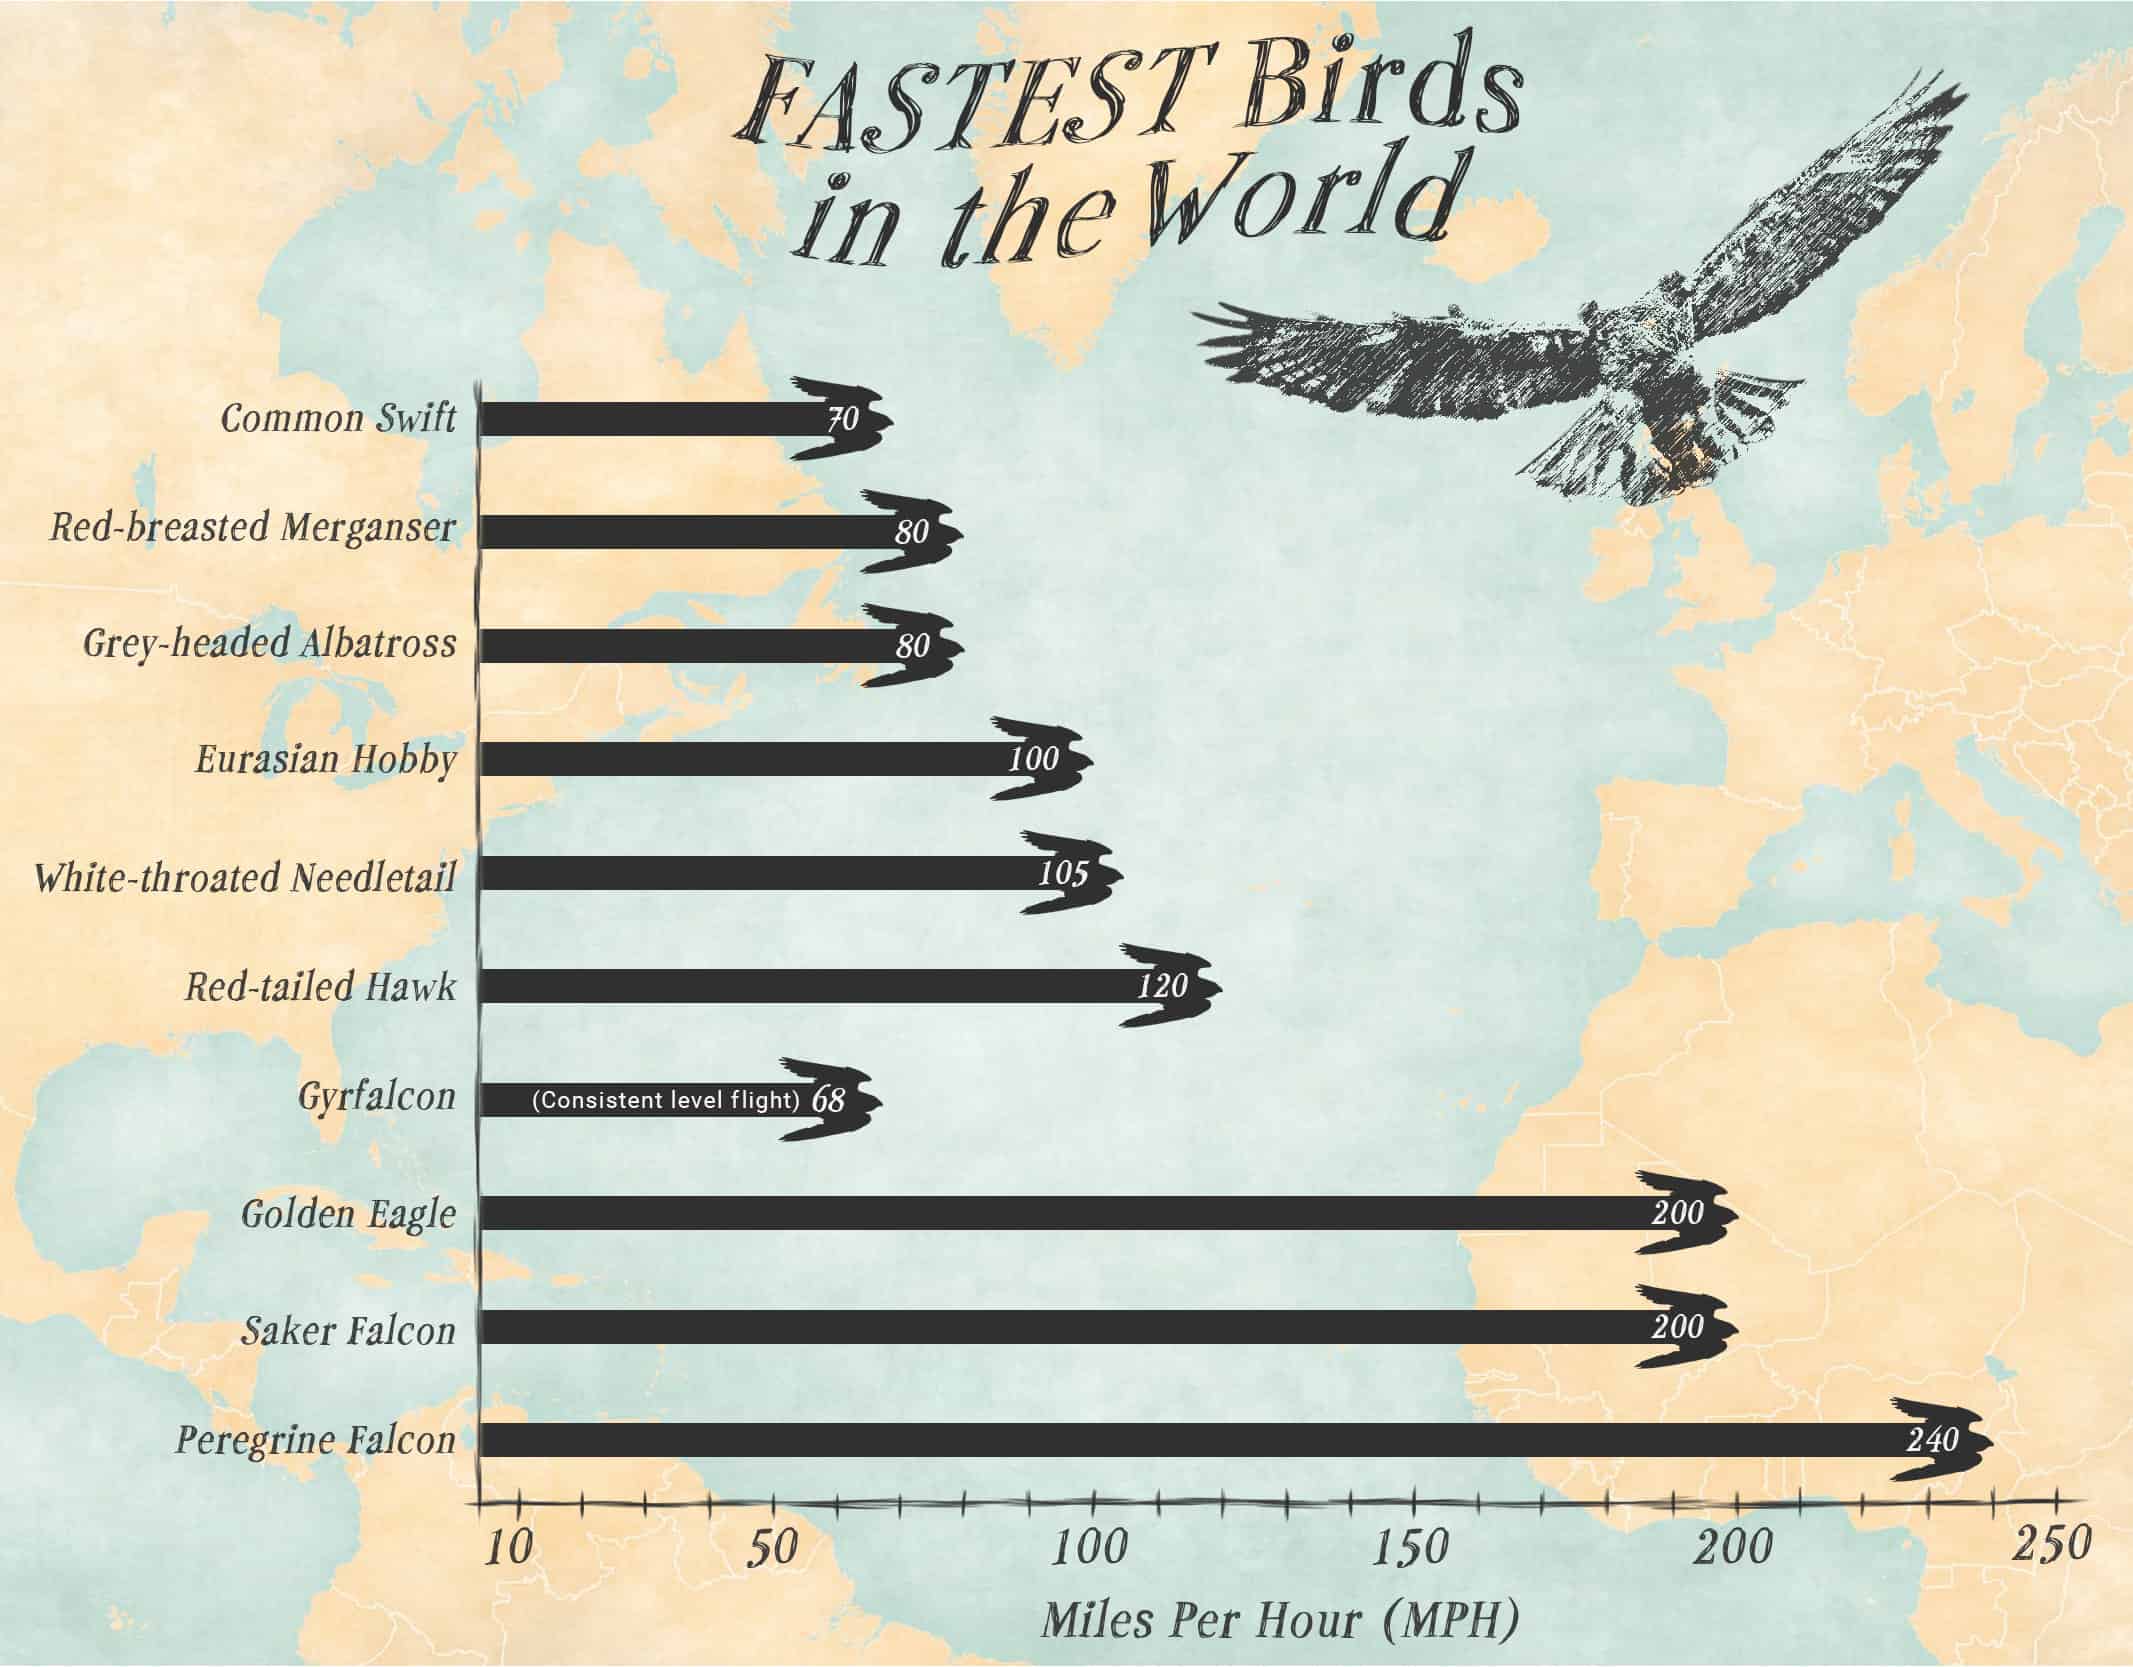 White-throated Needletail. Fastest bird